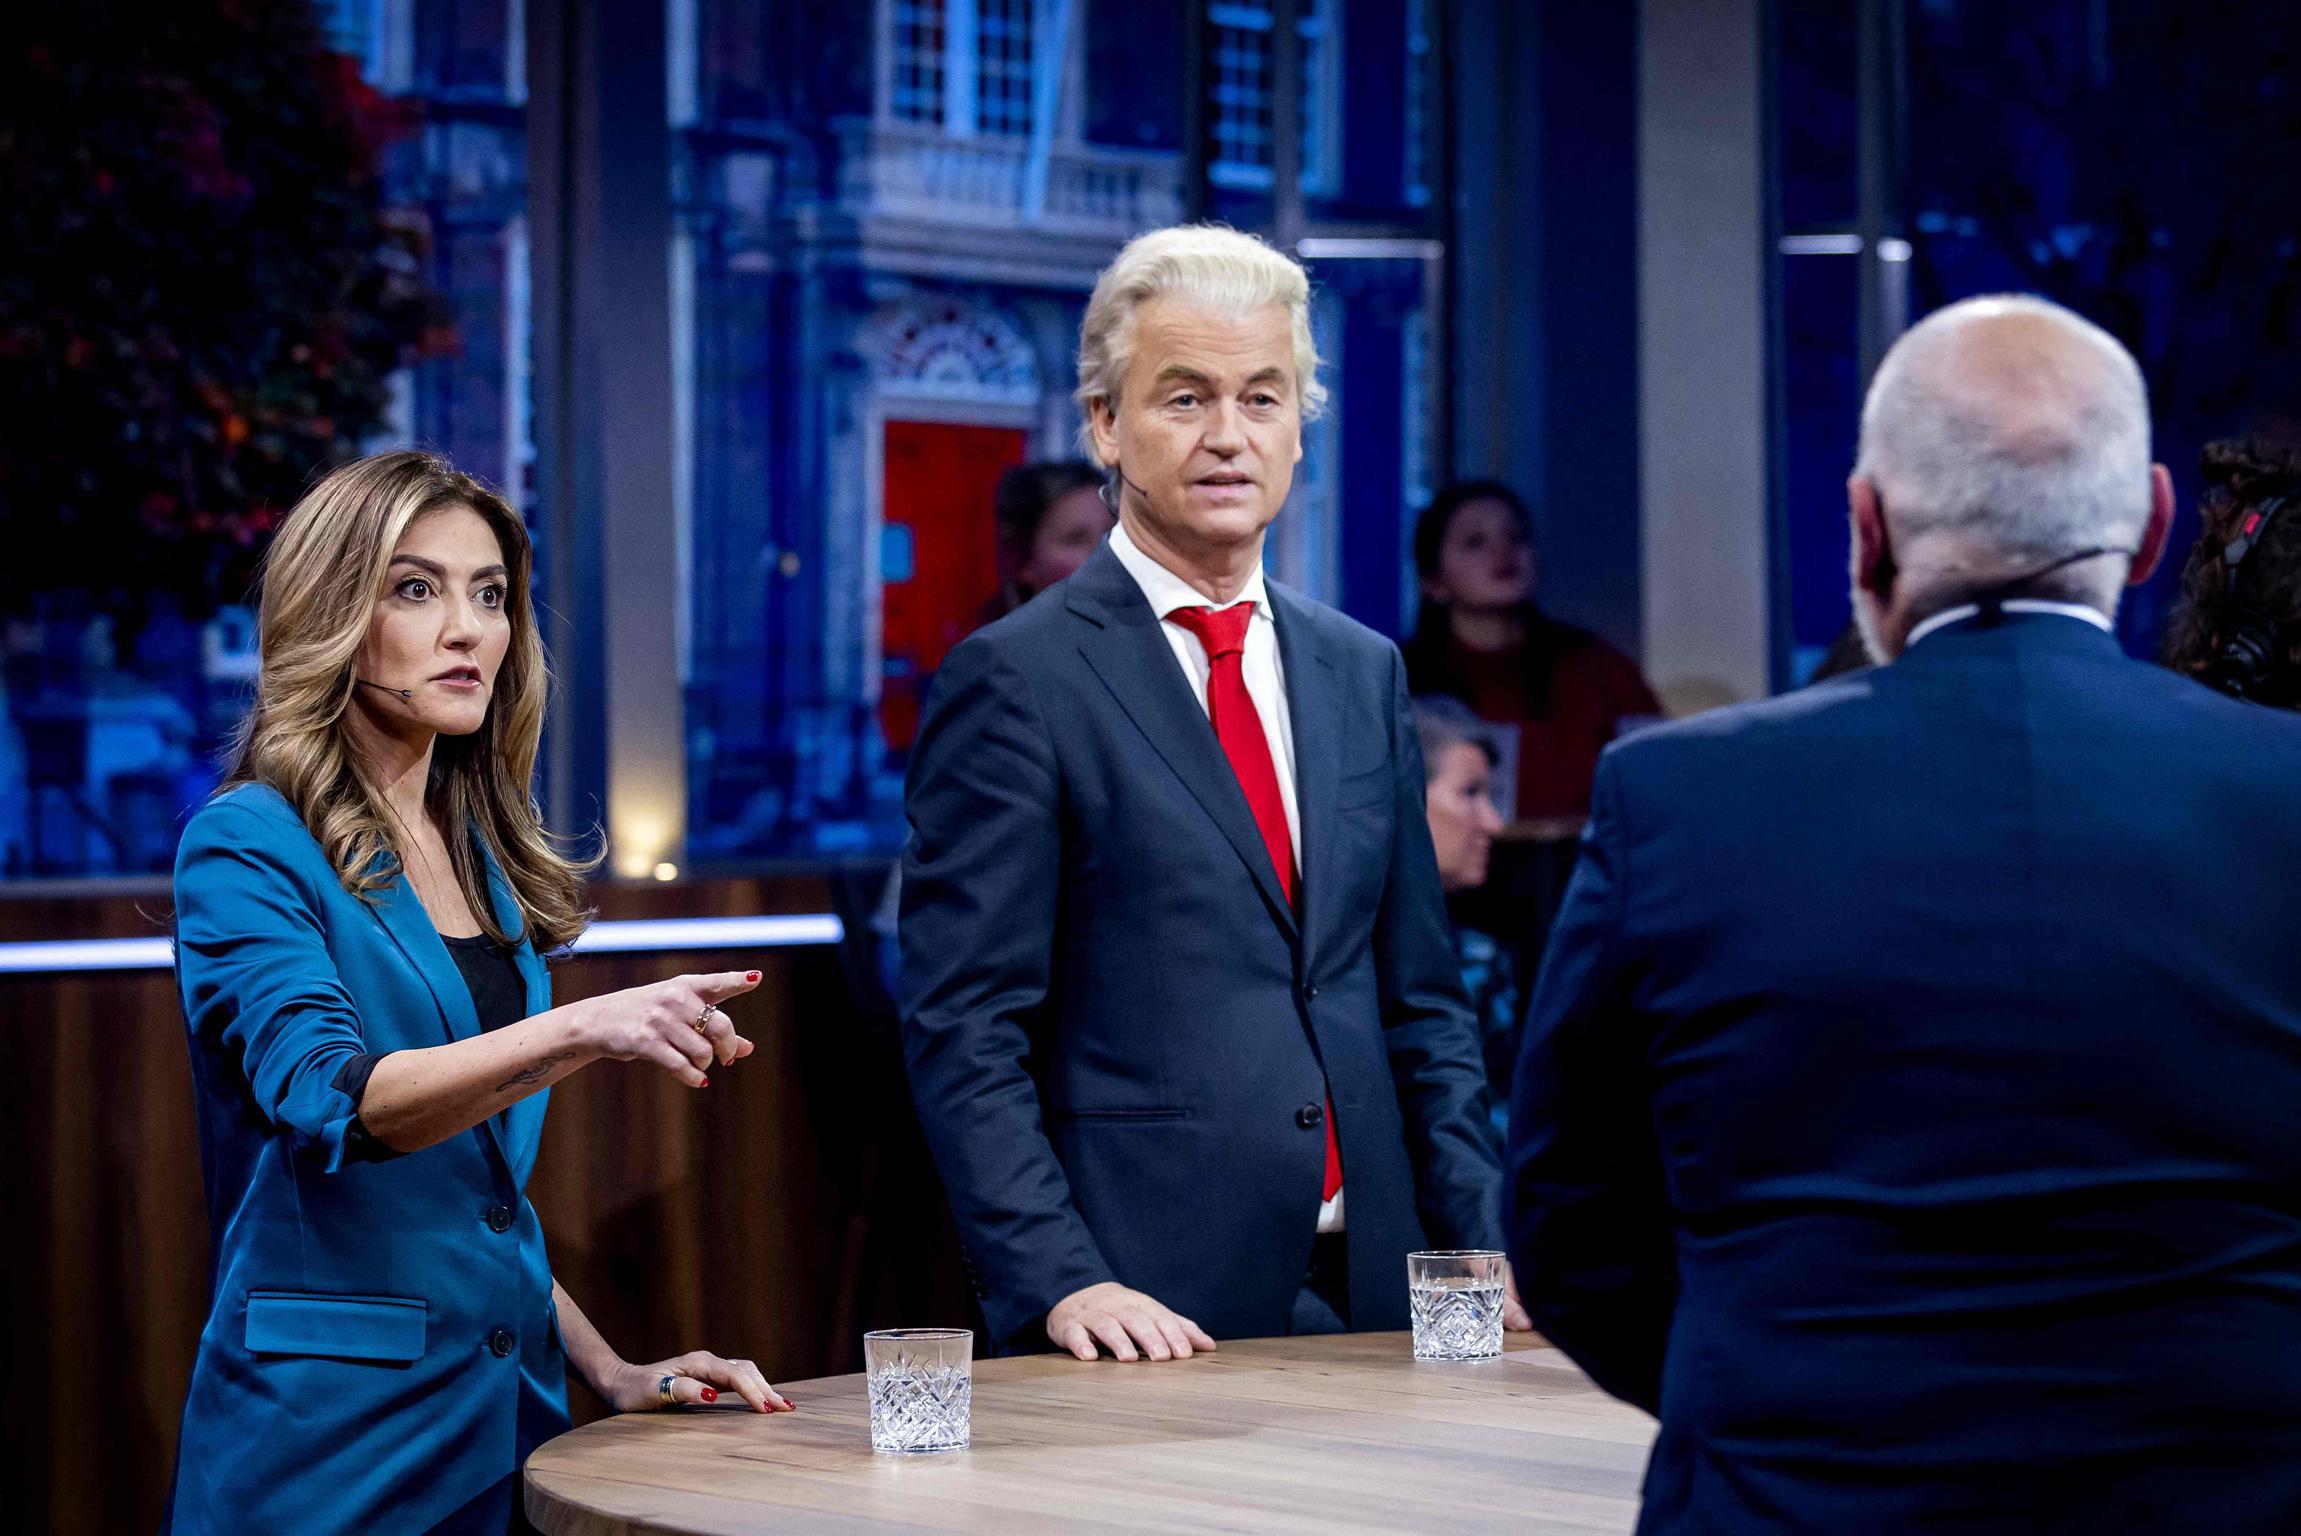 Dutch Leaders Address VVD Political Crisis, Refute Asylum Seeker Concerns Ahead of Election Debate